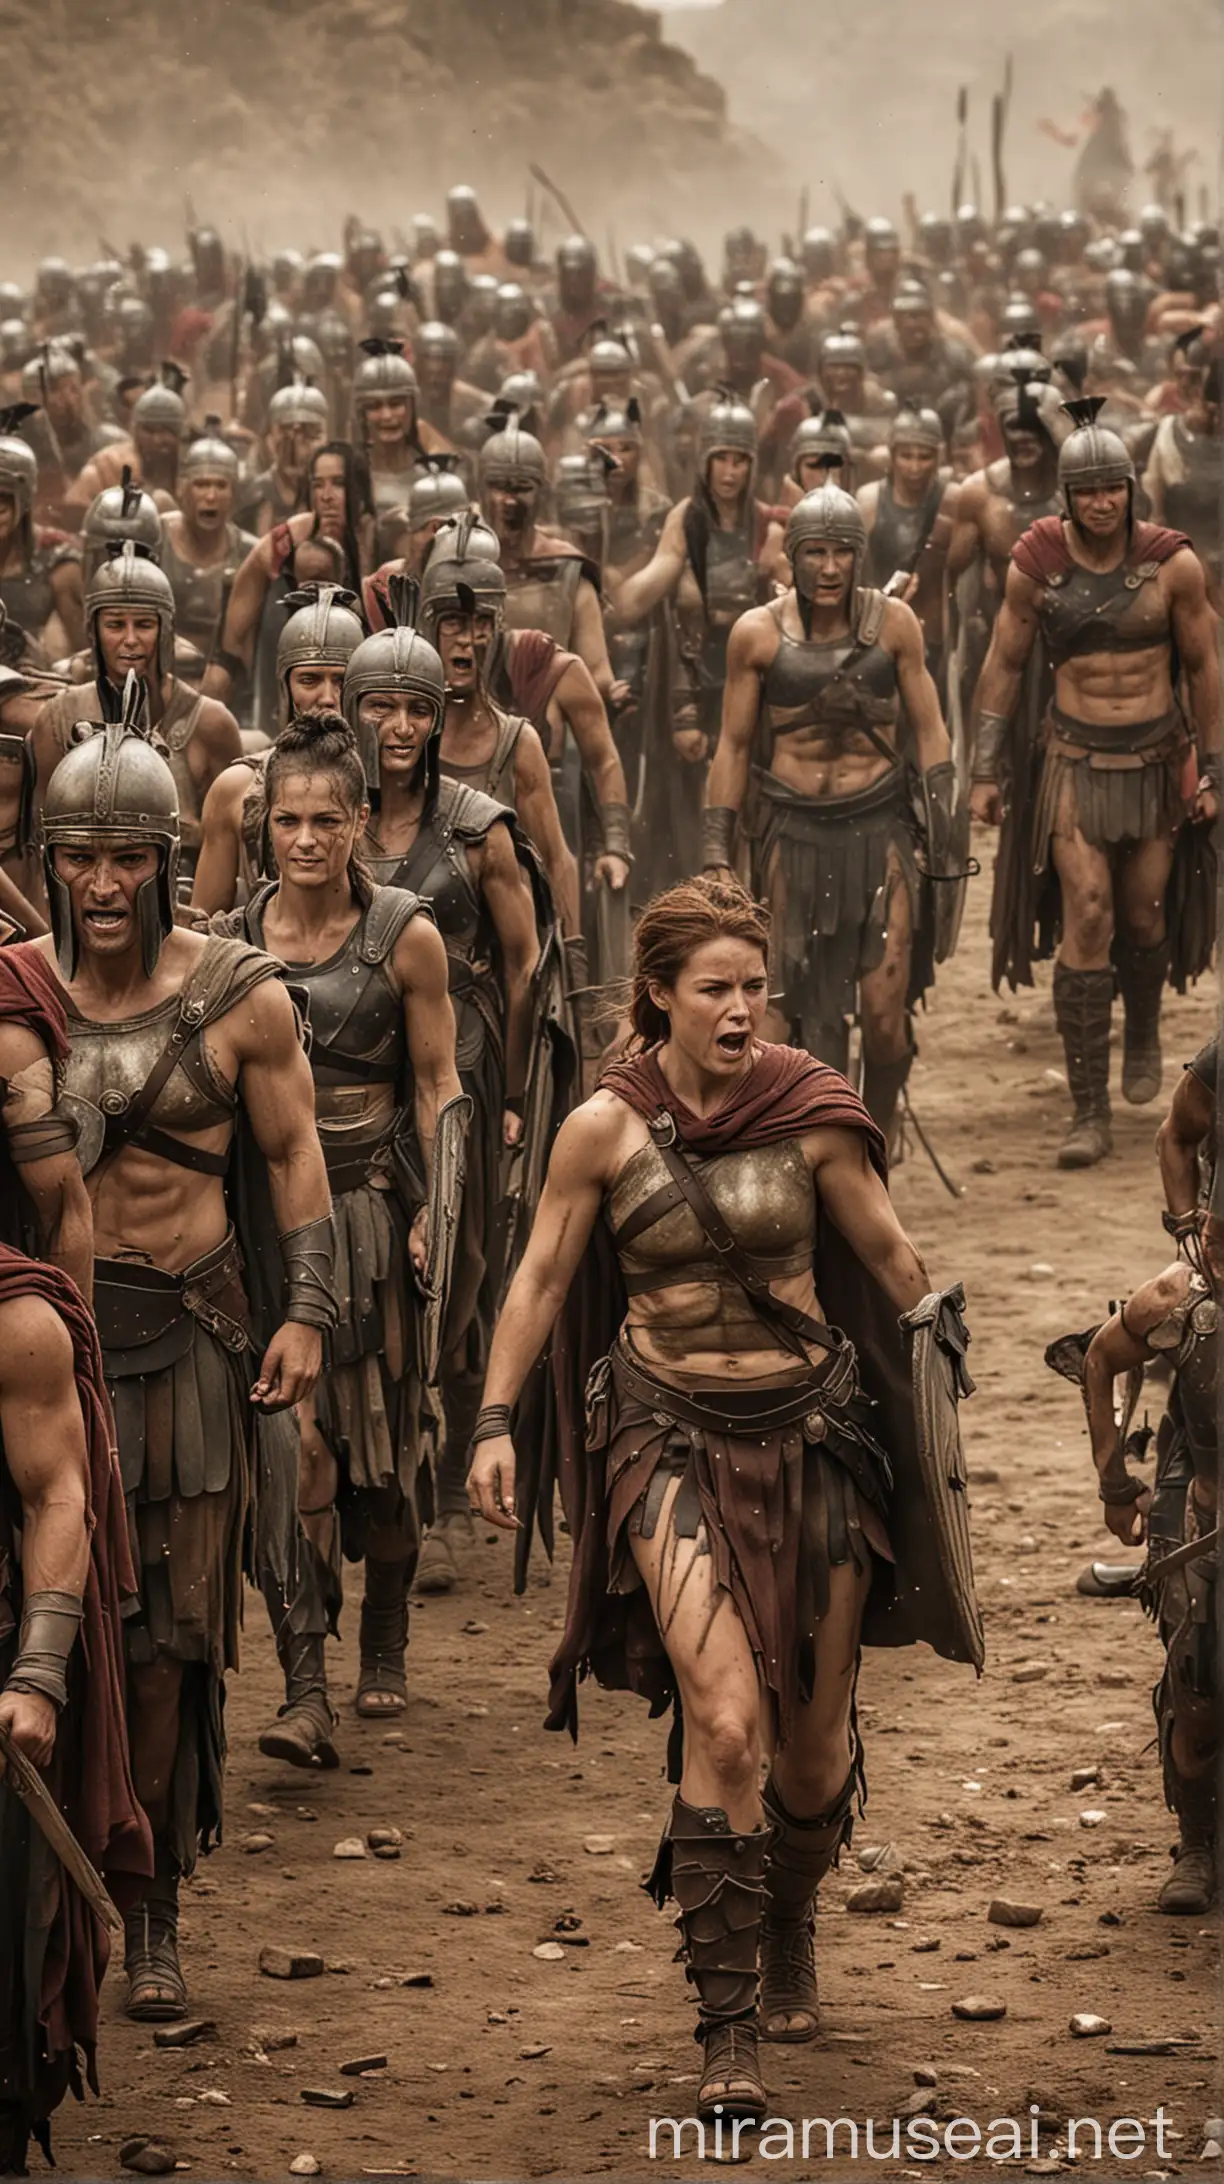 Spartan warriors, Spartan mothers, send-off scene, emotional farewells, honor and sacrifice
